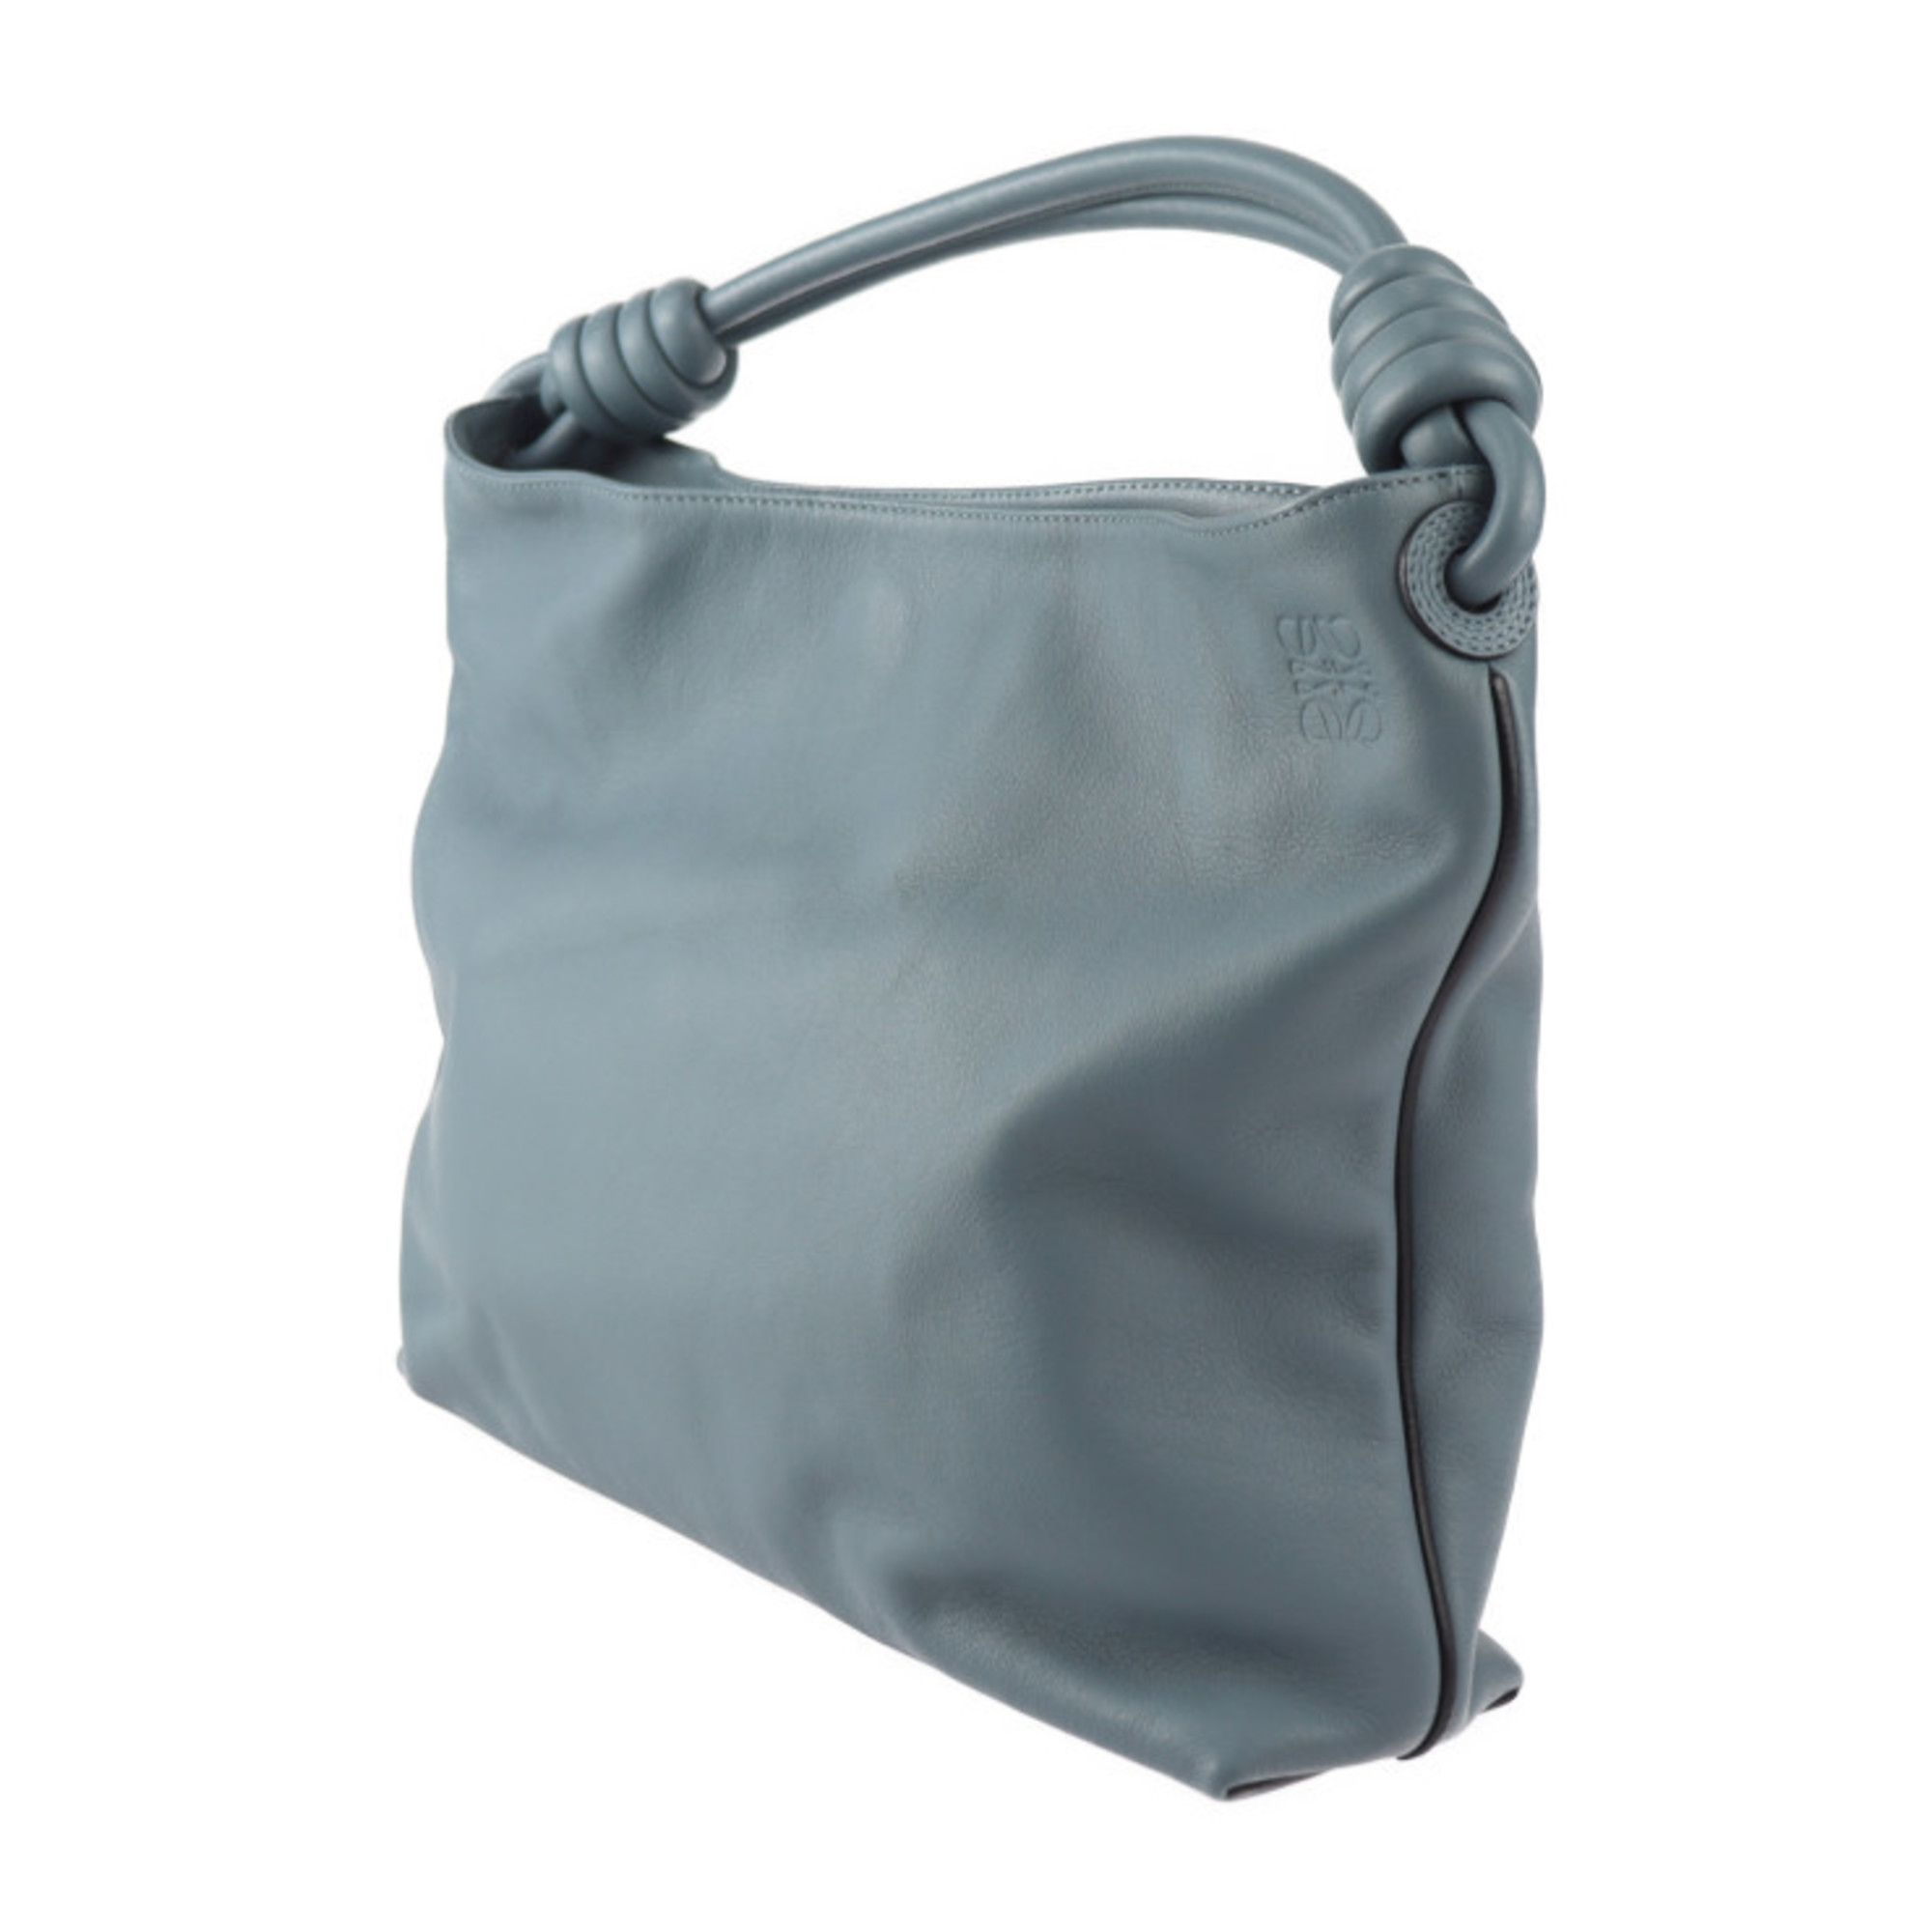 LOEWE Flamenco Hobo Small Handbag 334.30.L44 Calf Leather Light Blue Shoulder Bag Tote